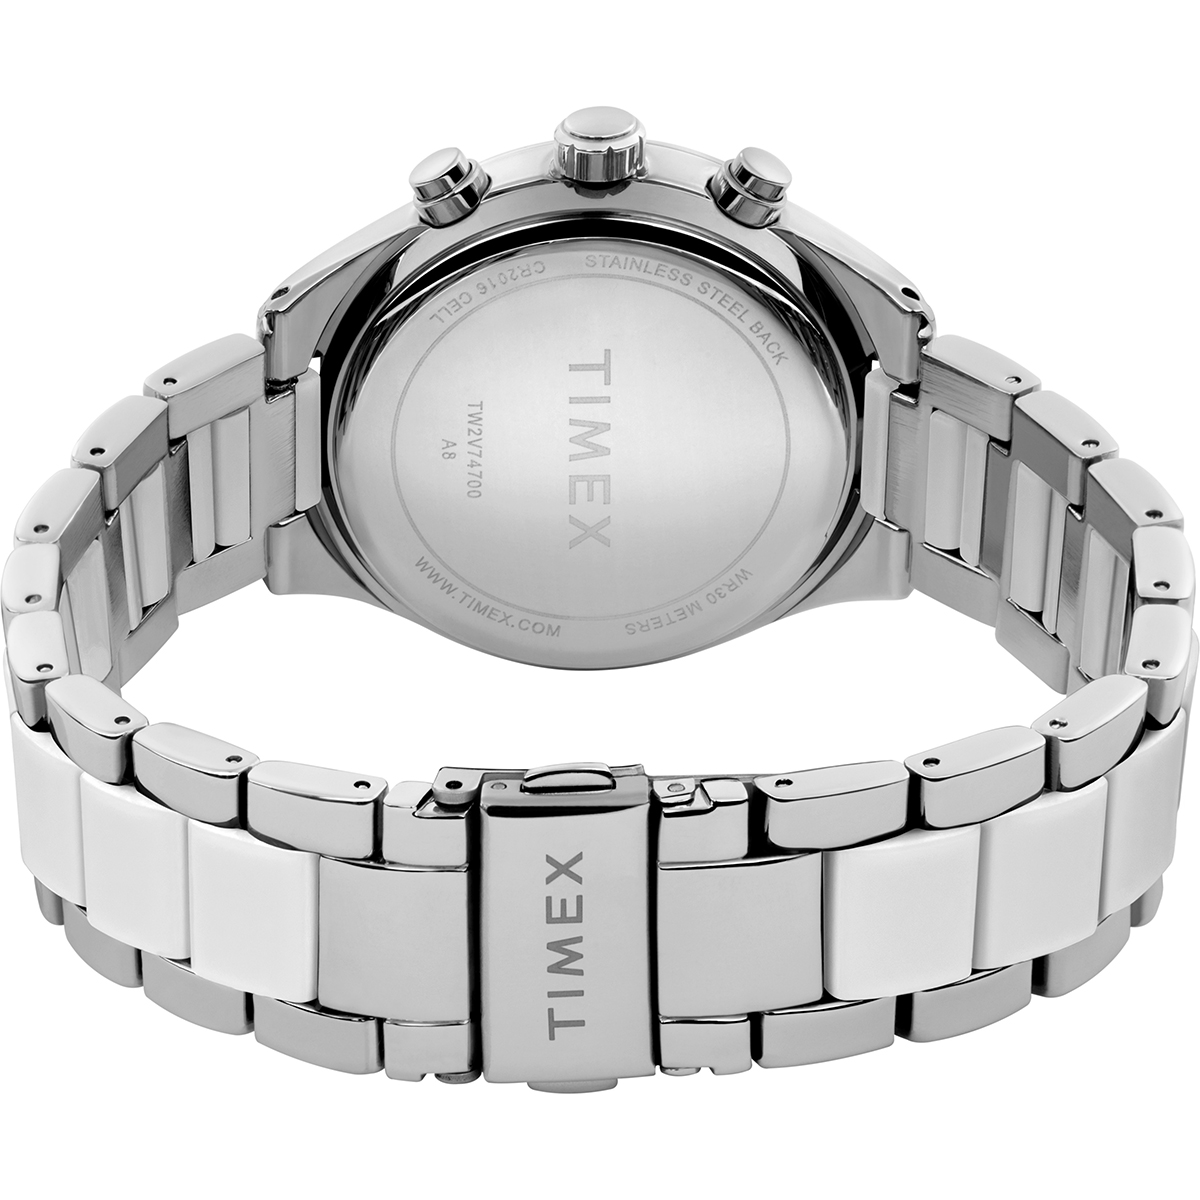 Womens Timex(R) Silver-Tone Chronograph Dial Watch - TW2V74700JI